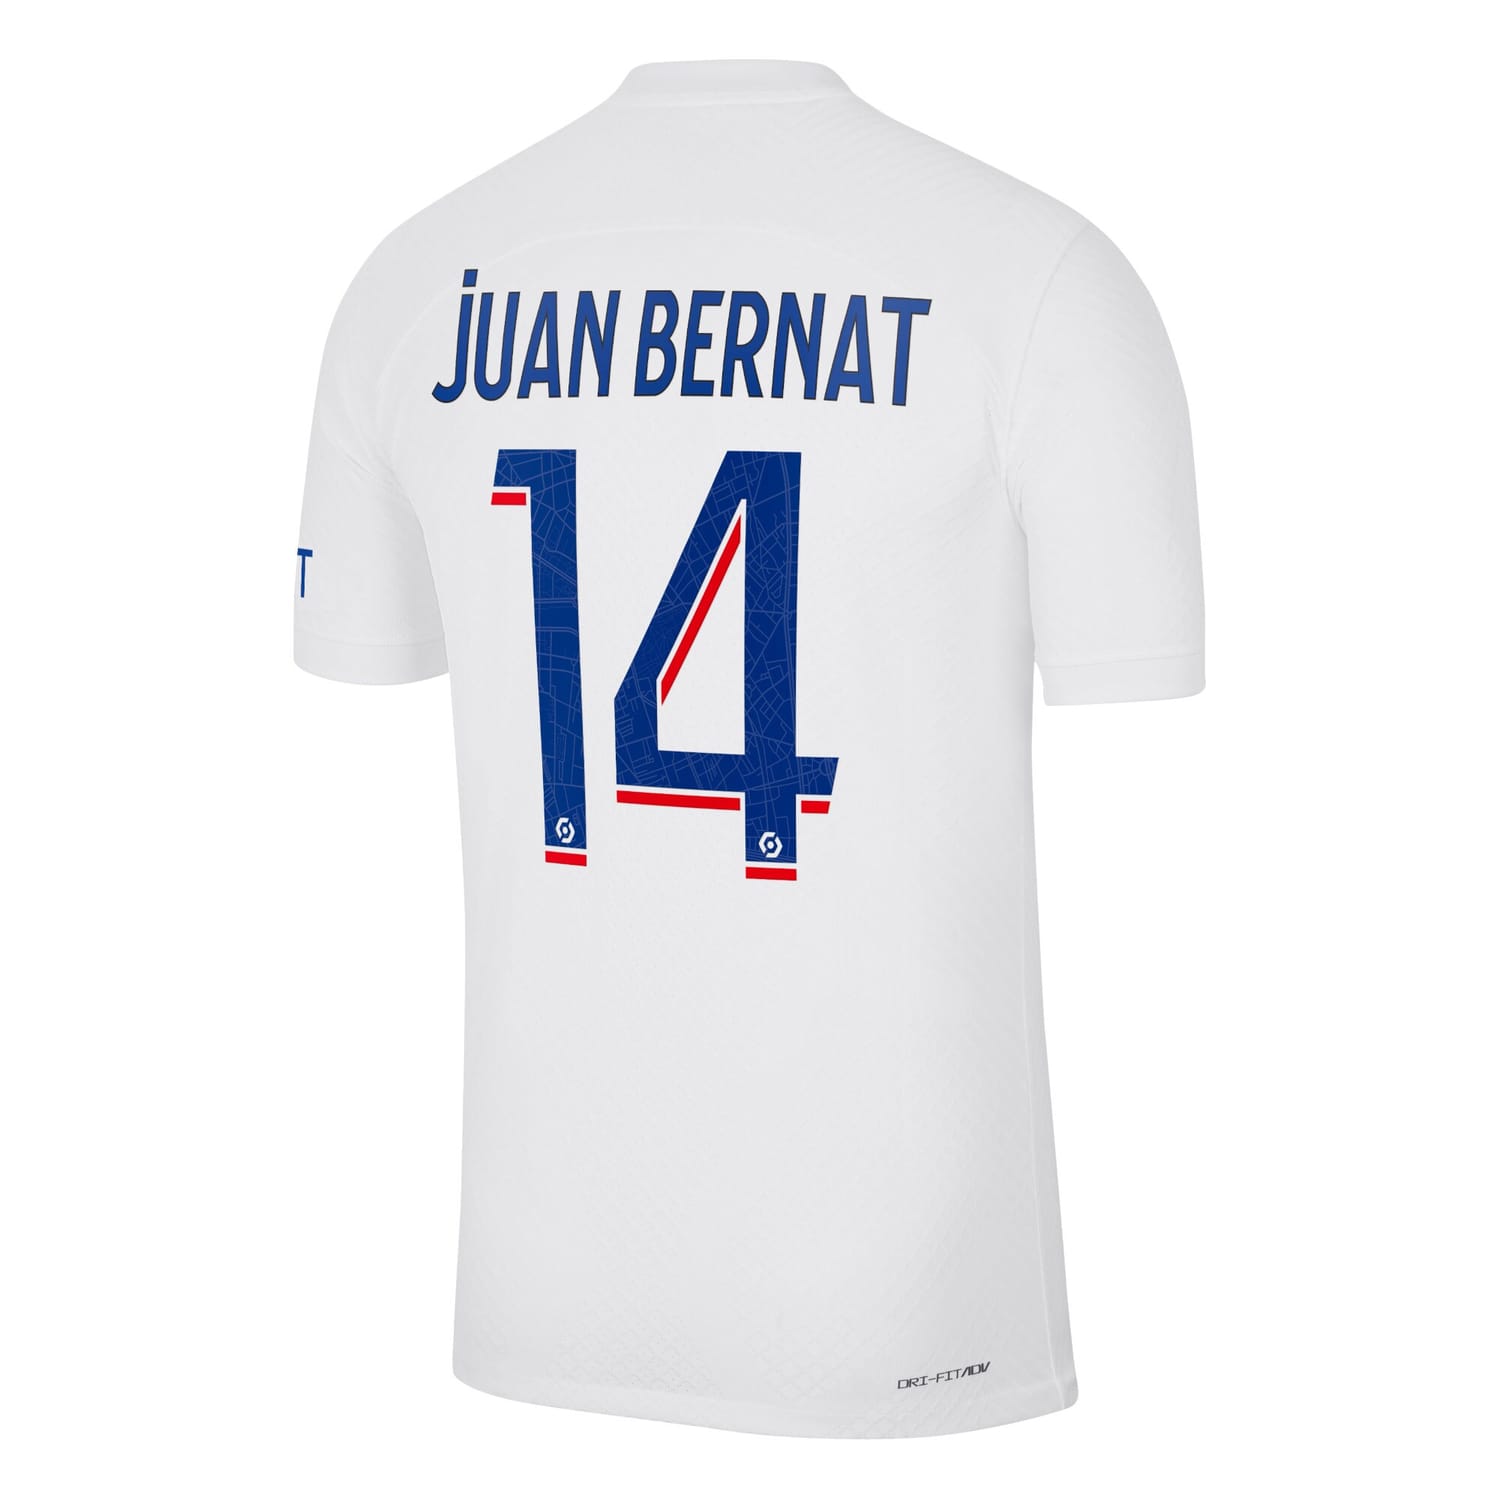 Ligue 1 Paris Saint-Germain Third Authentic Jersey Shirt 2022-23 player Juan Bernat 14 printing for Men